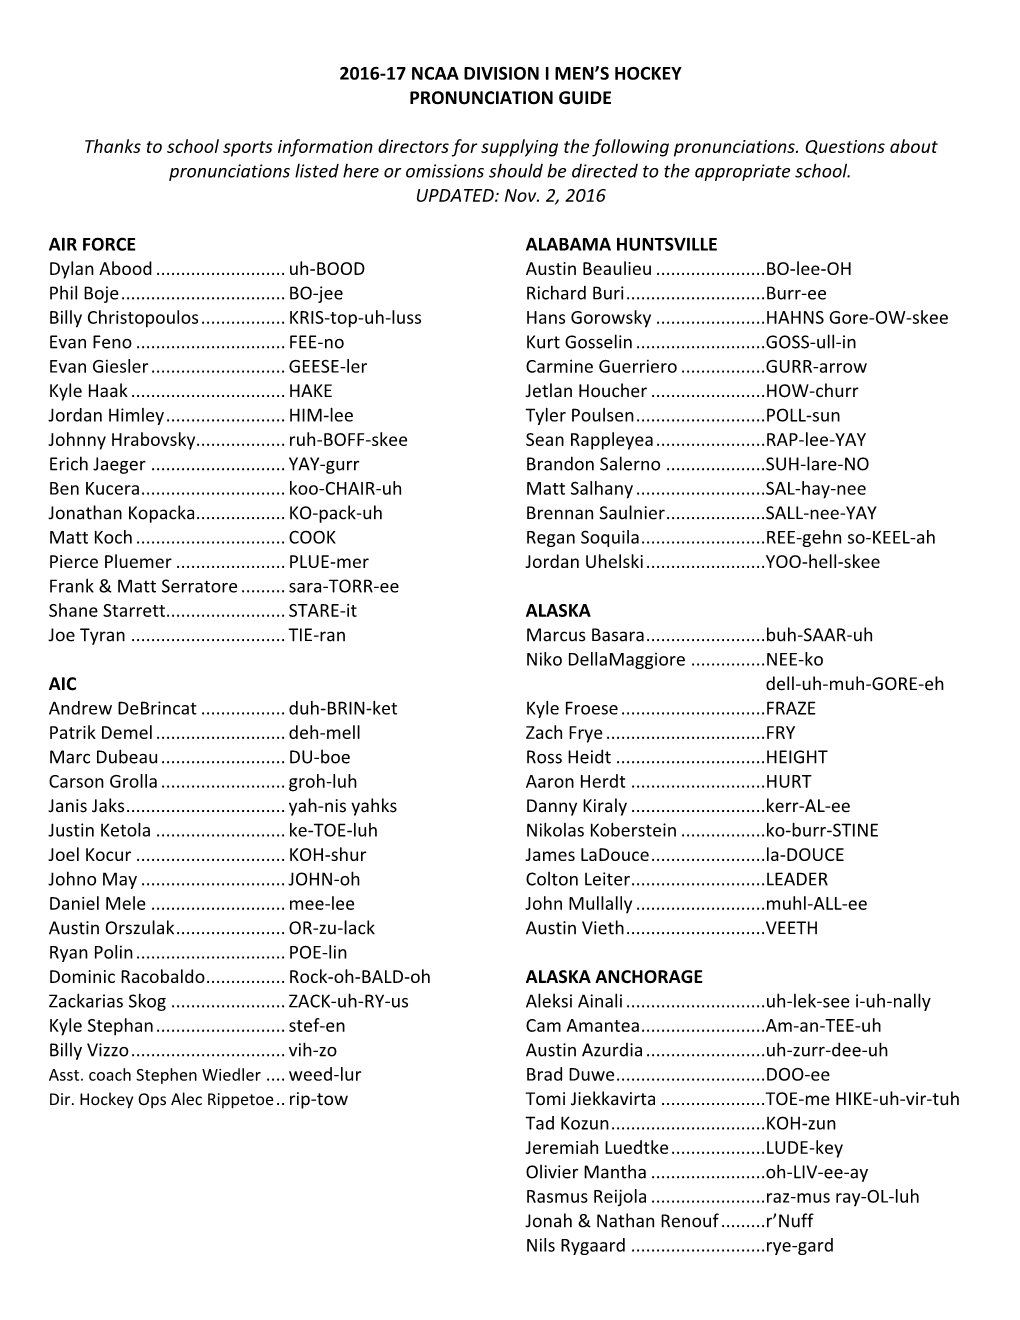 2016-17 Ncaa Division I Men's Hockey Pronunciation